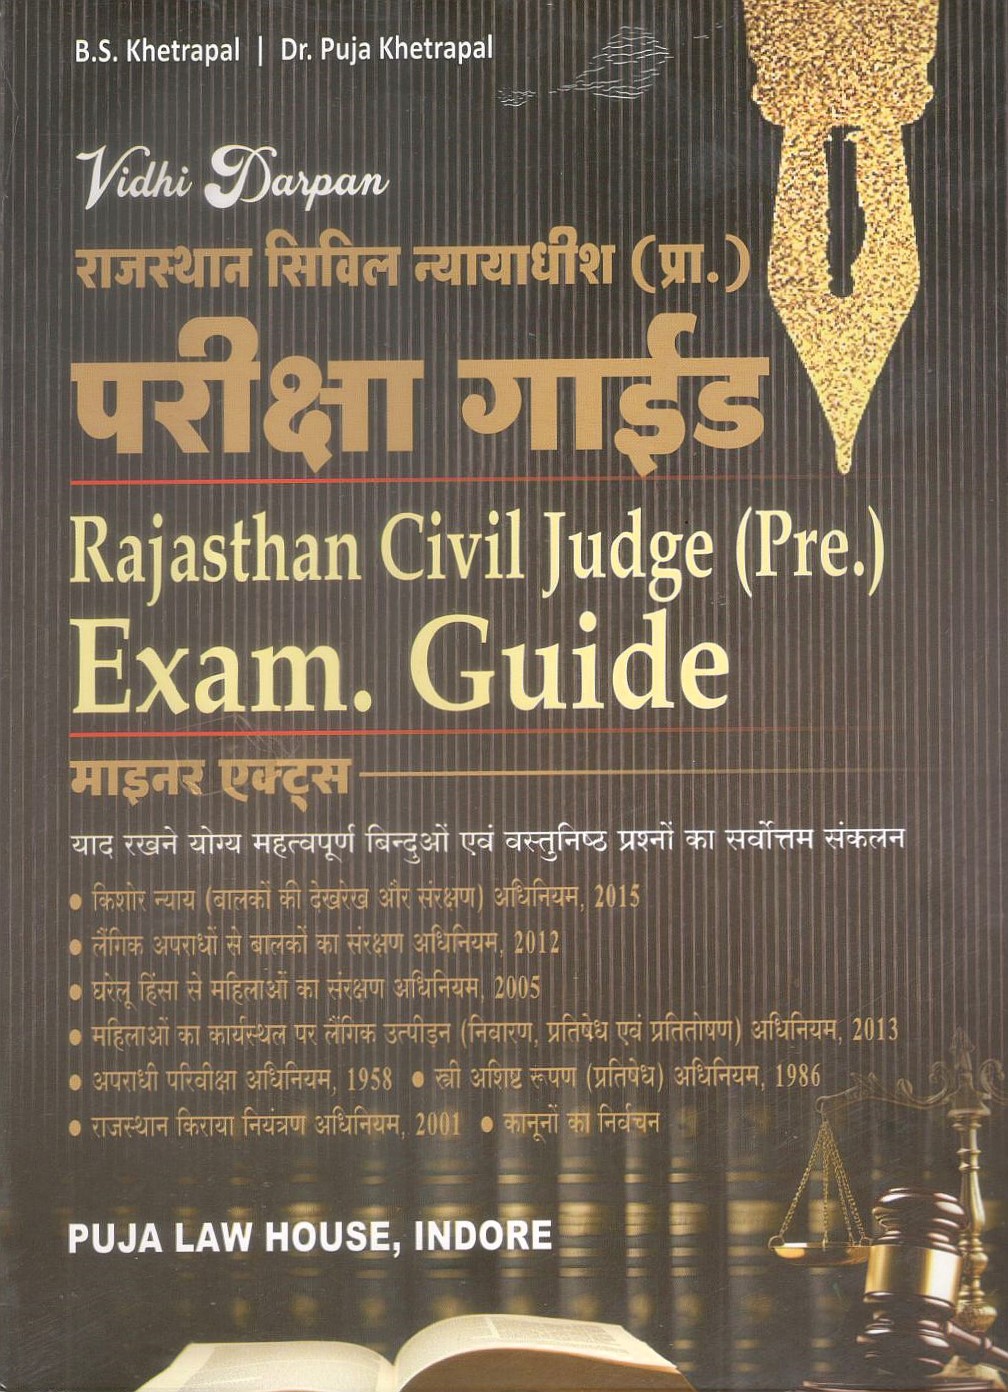 Vidhi Darpan - राजस्थान सिविल न्यायाधीश (प्रा.) परीक्षा गाईड  / Rajasthan Civil Judge (Pre.) Exam. Guide - Minor Acts